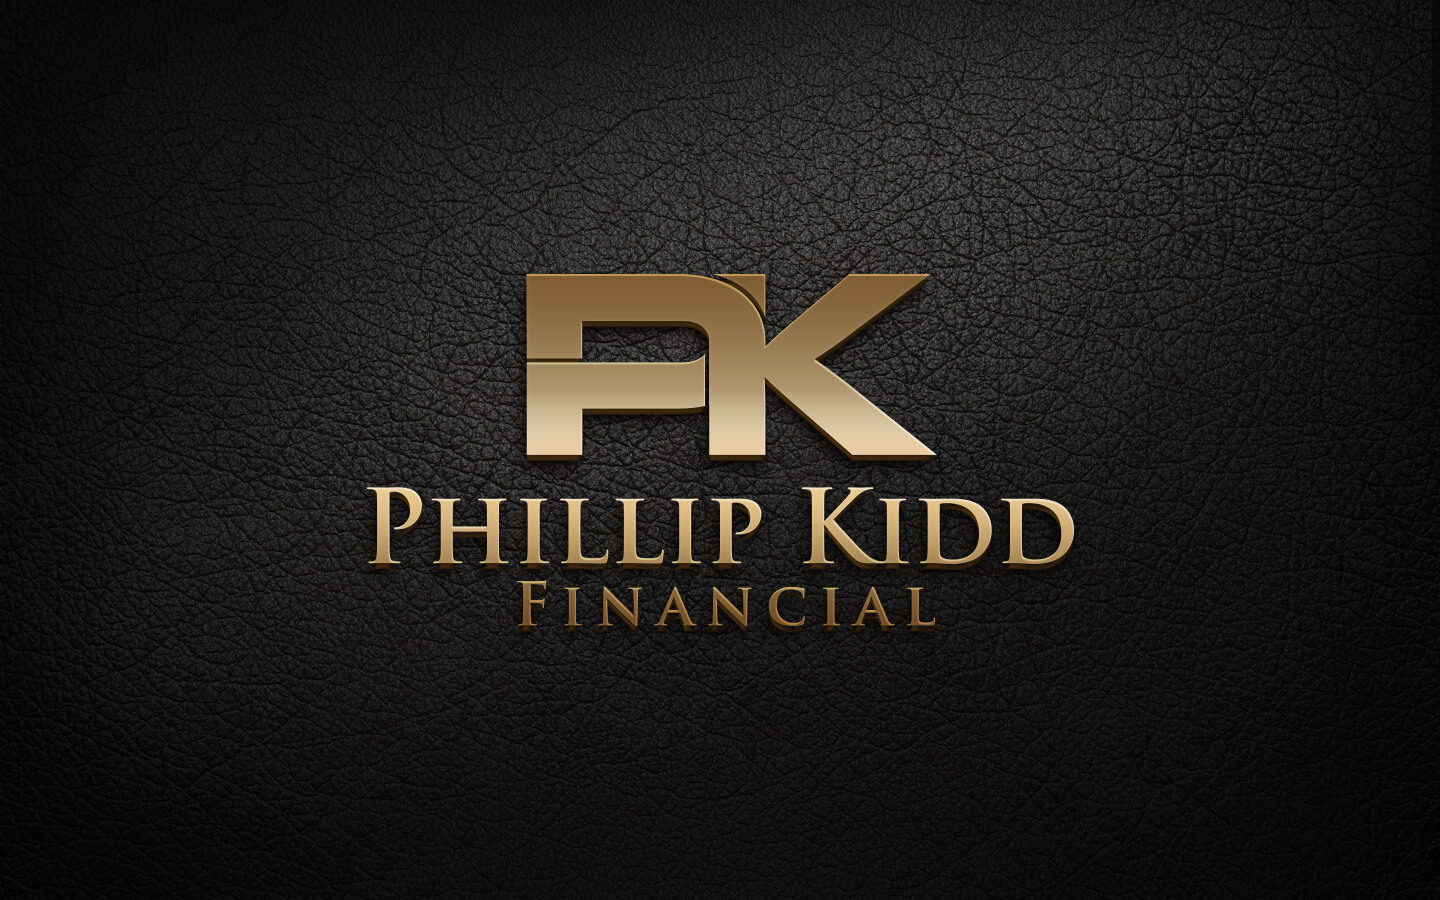 Phillip Kidd Insurance